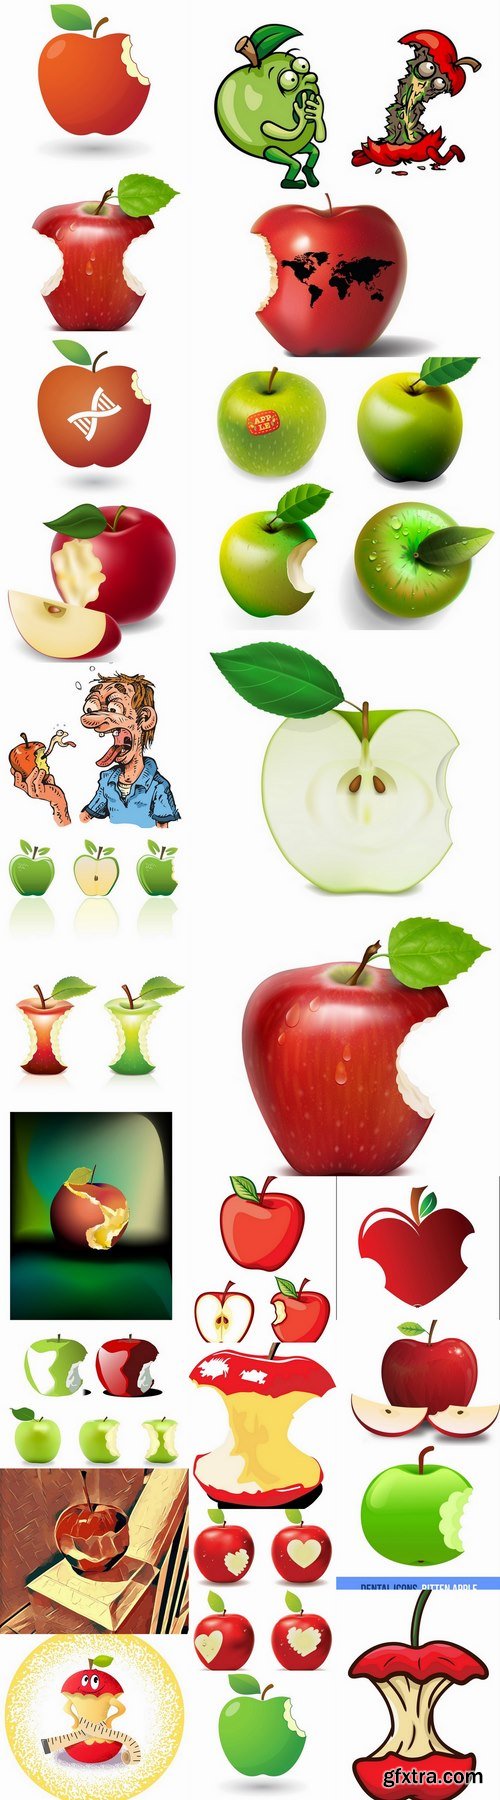 Bitten apple trace of teeth fruit vector image 25 EPS